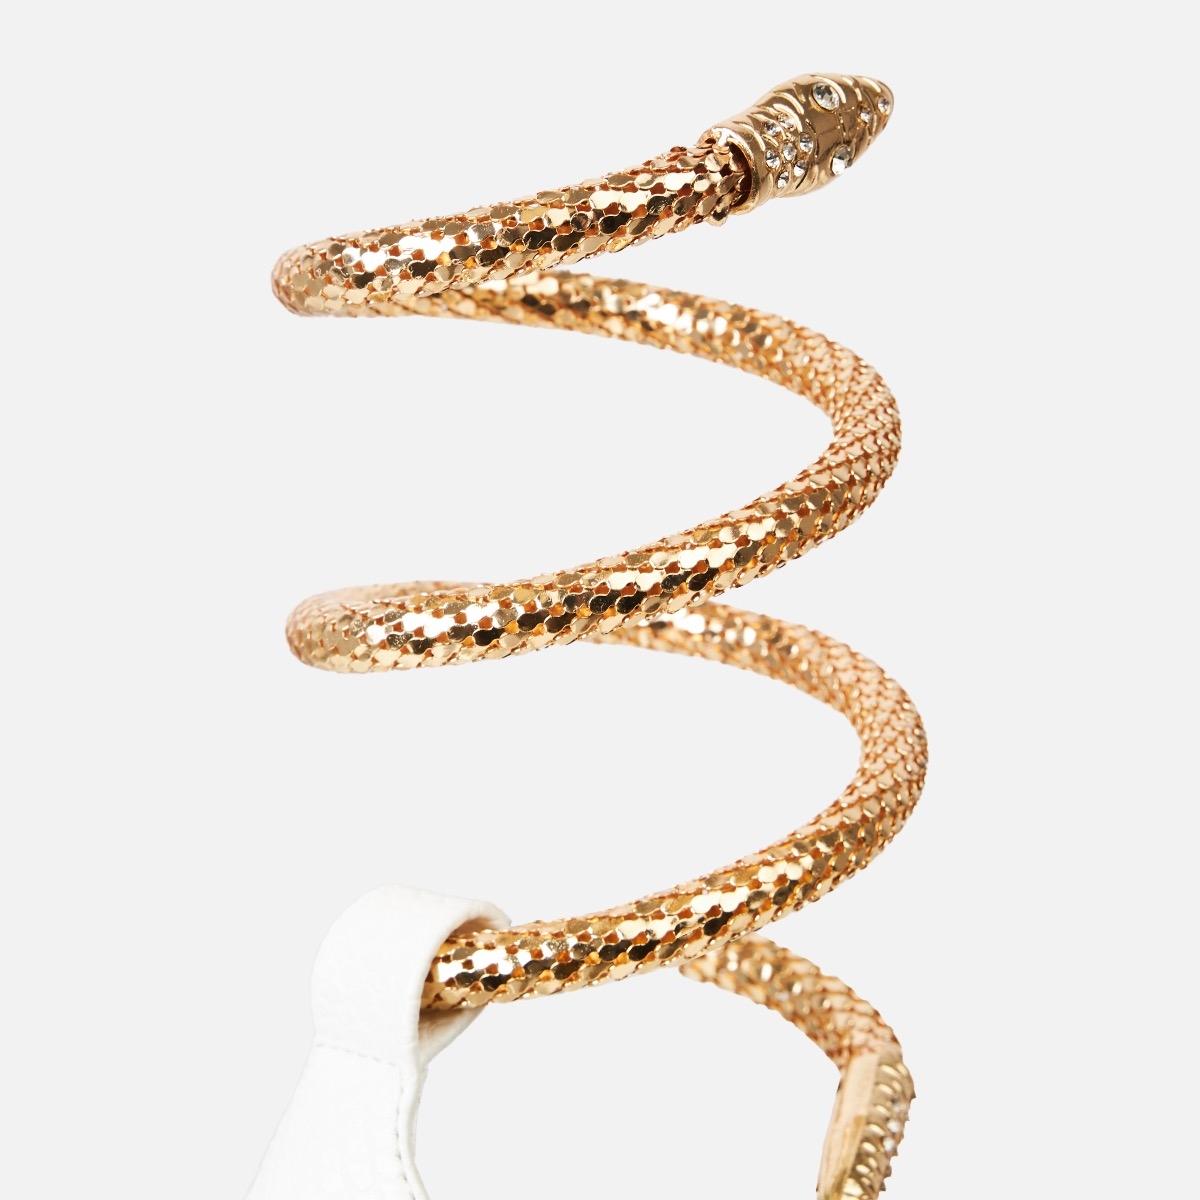 Medusa Light Gold Snake Print Cuff Stiletto Heels| SIMMI London